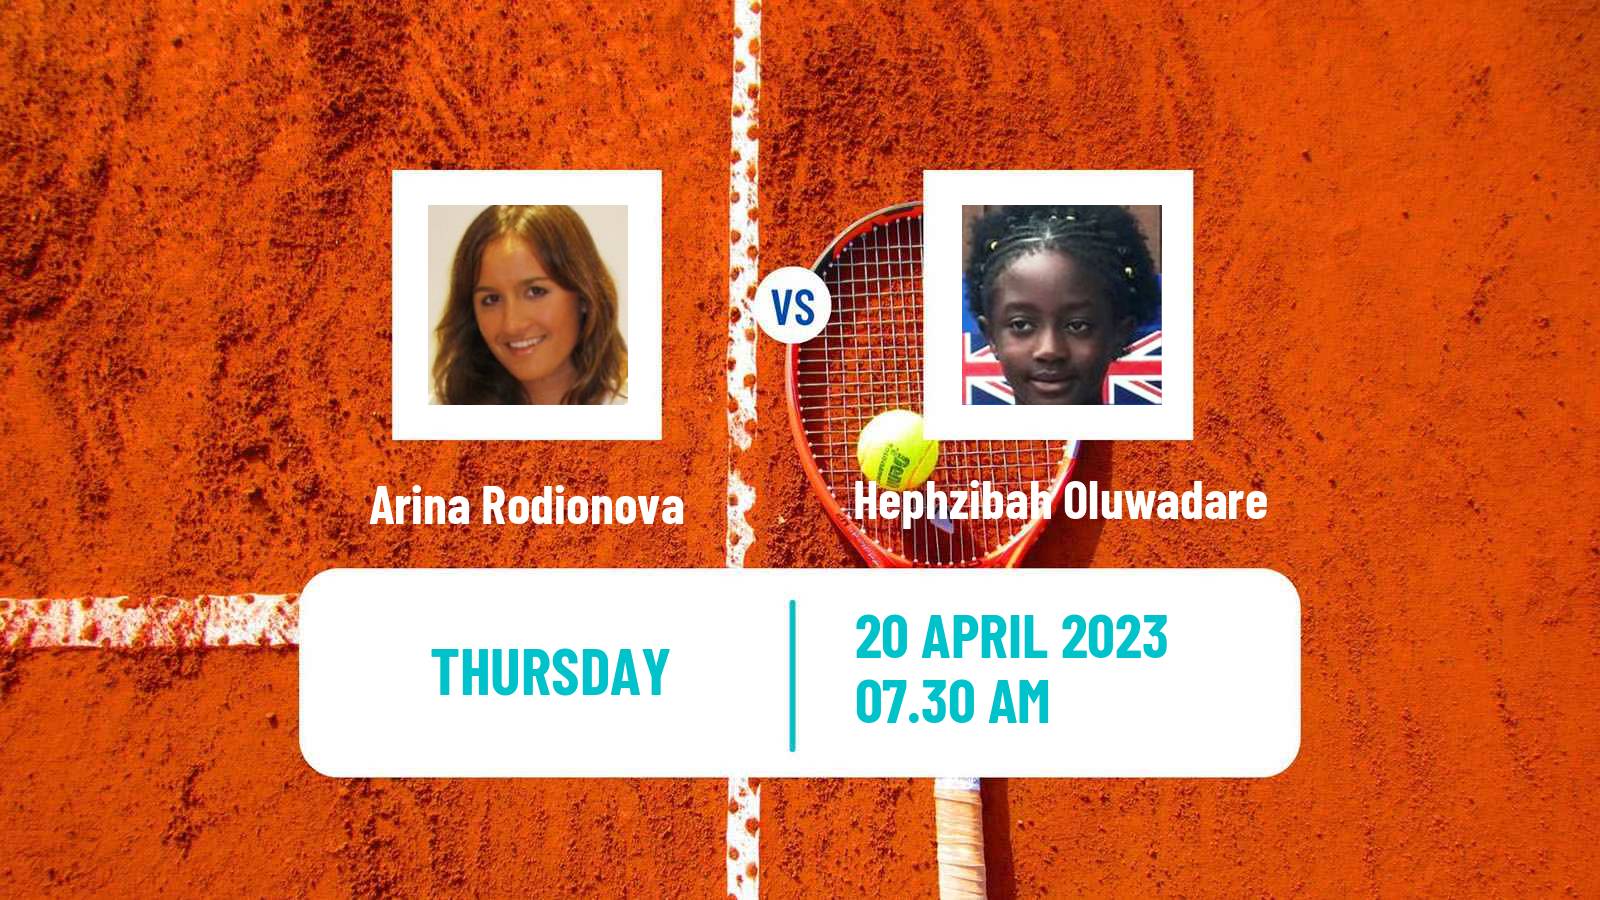 Tennis ITF Tournaments Arina Rodionova - Hephzibah Oluwadare